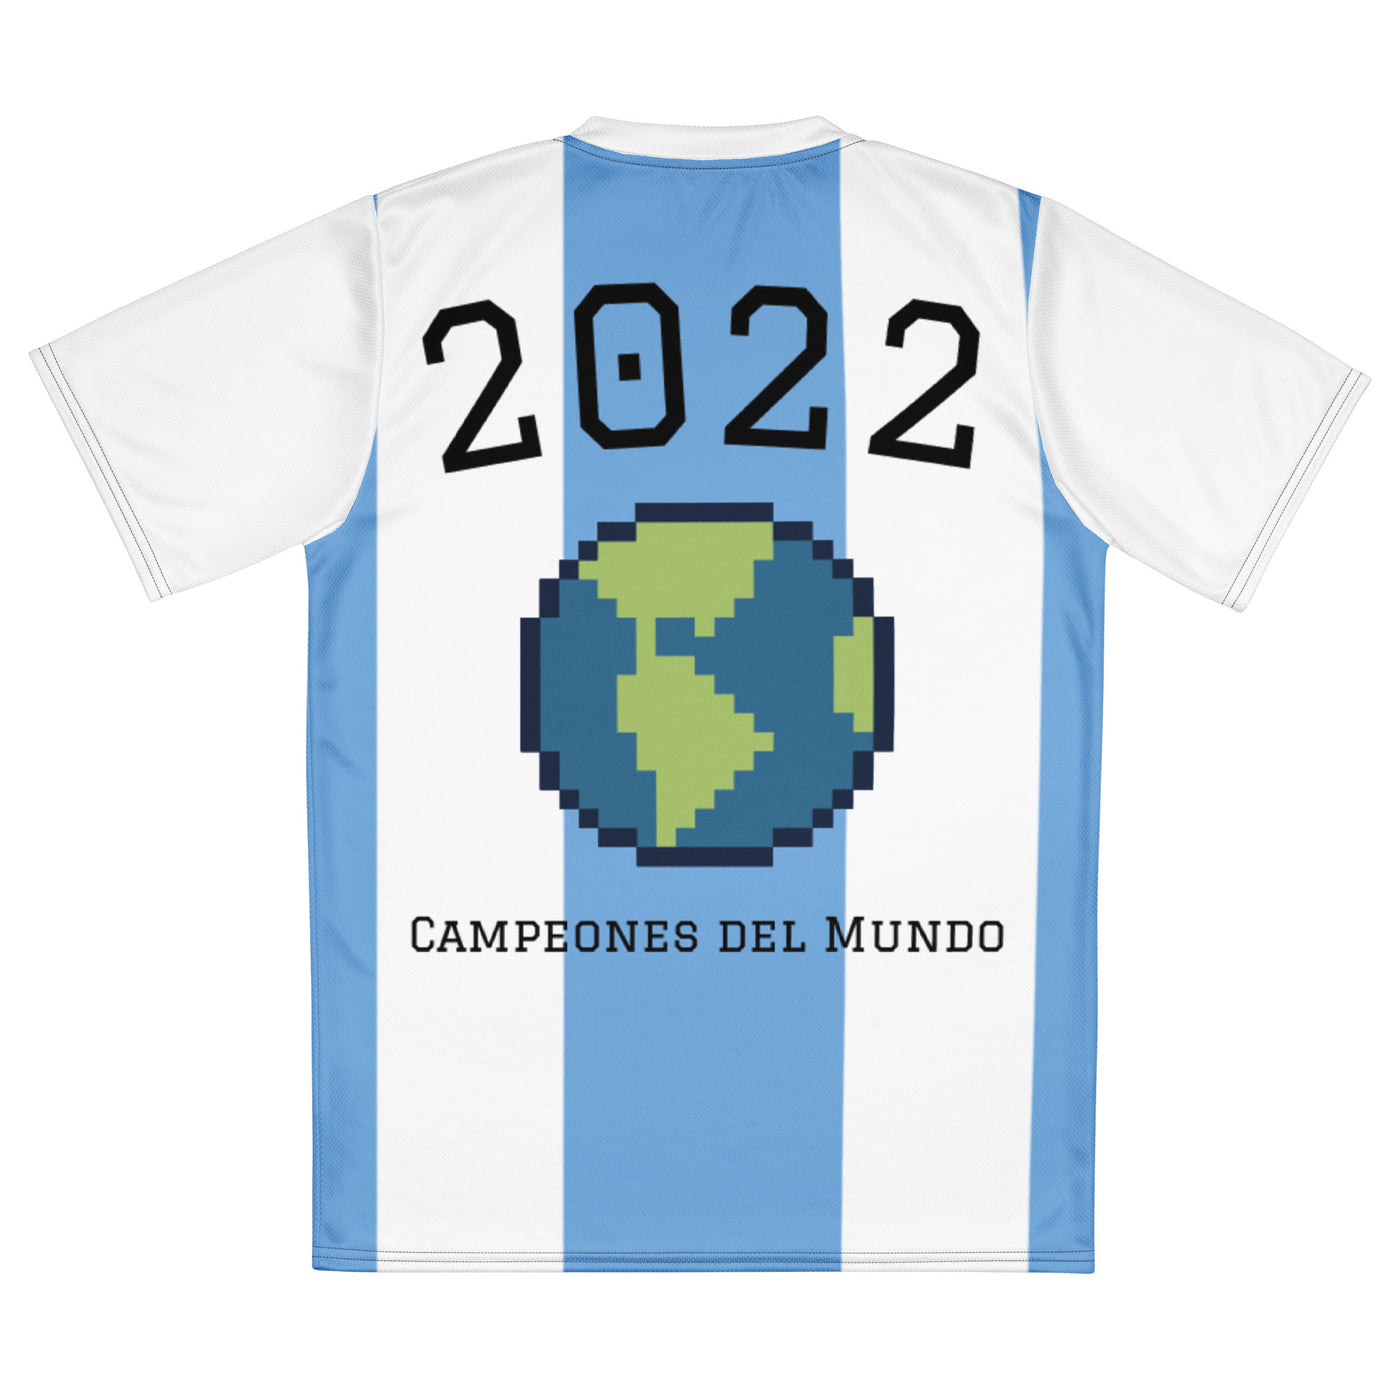 2022 Argentina POR VIDA sports jersey